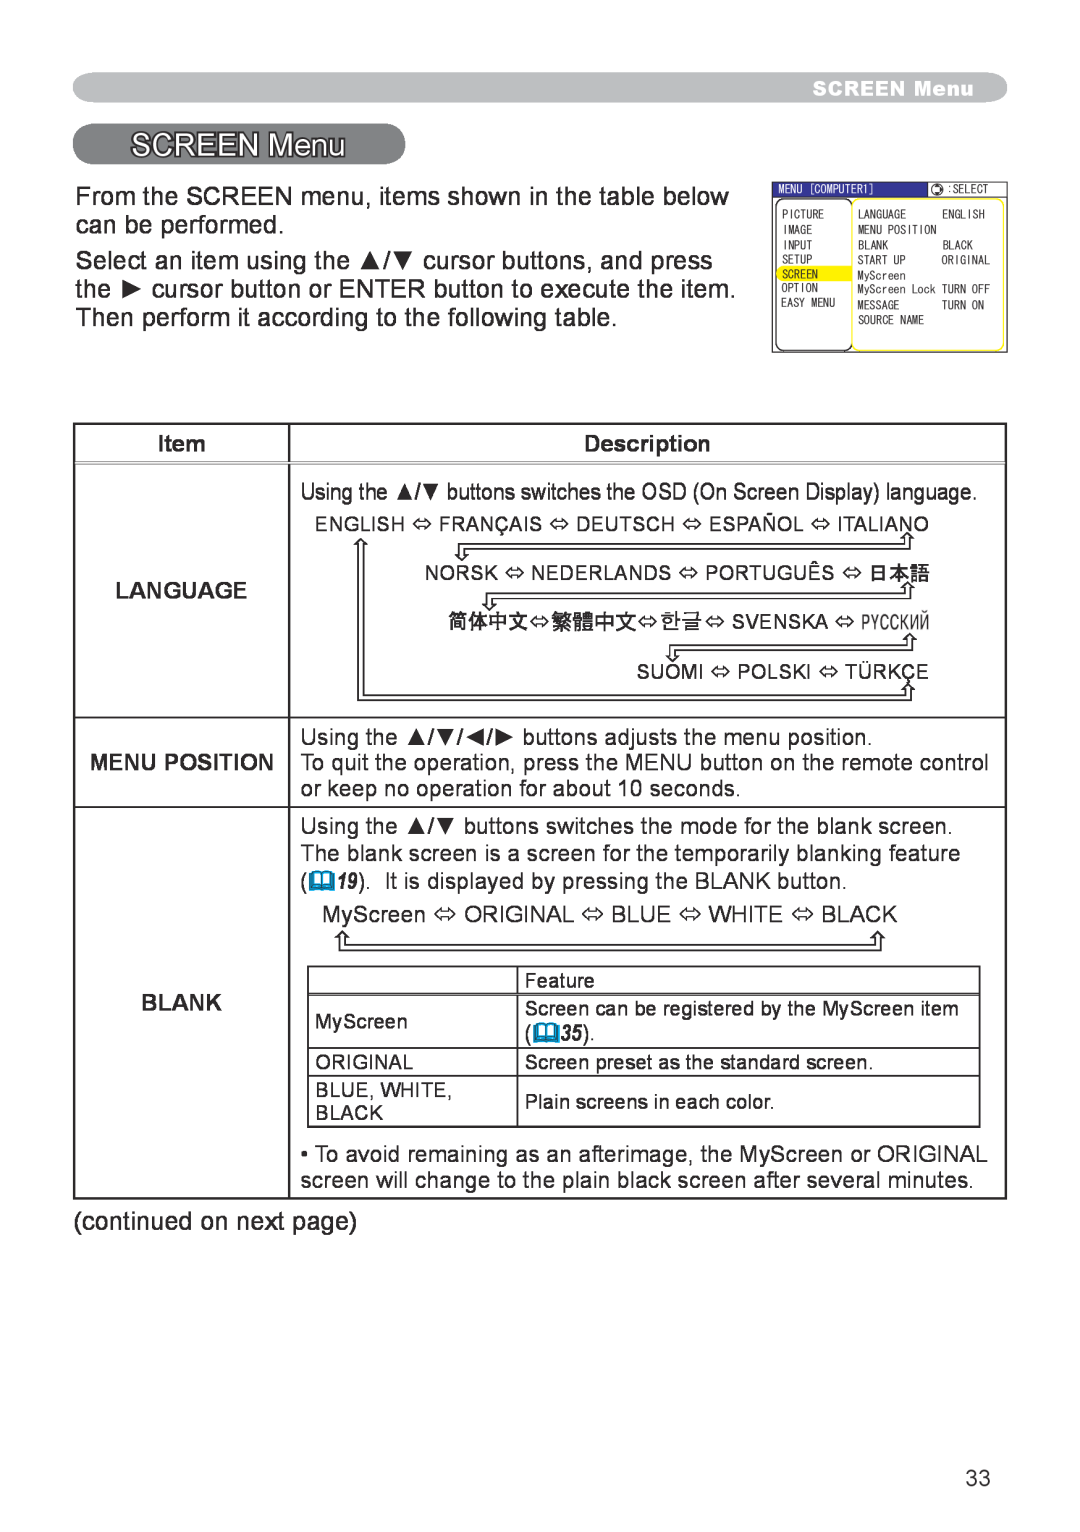 Apple CPX1, CPX5 user manual SCREEN Menu, Description, Language, Blank 